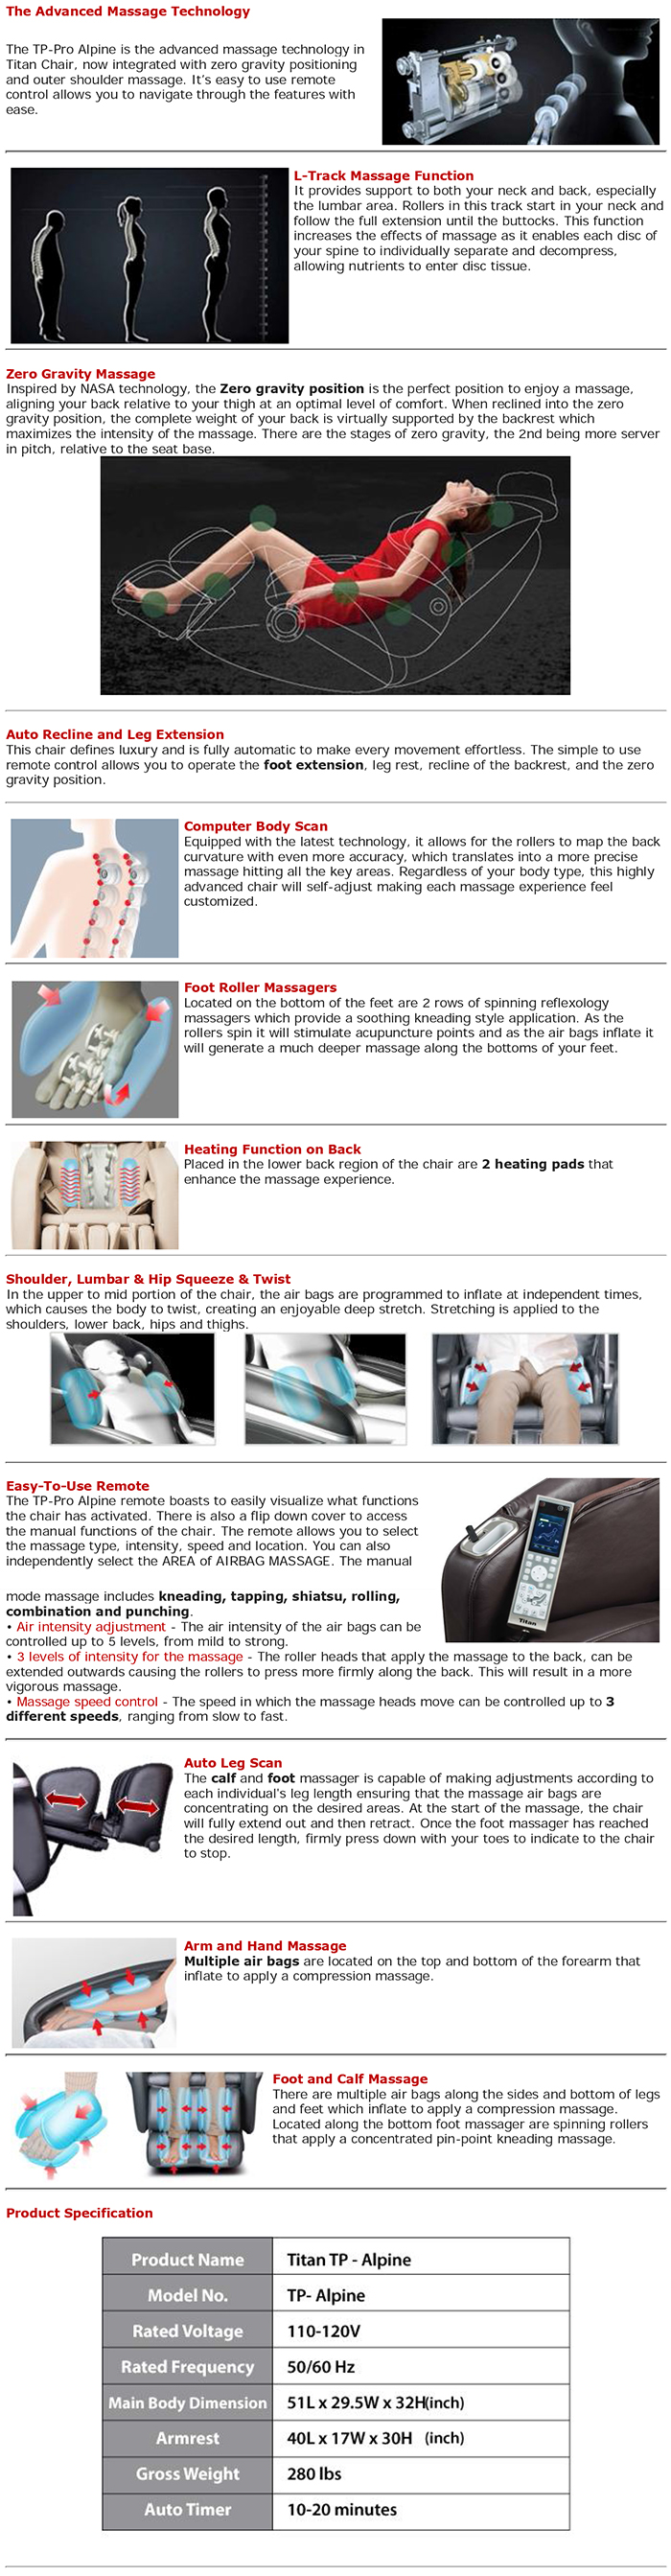 Titan TP Pro Alpine Zero Gravity Zero Gravity Massage Chair Recliner Specifications